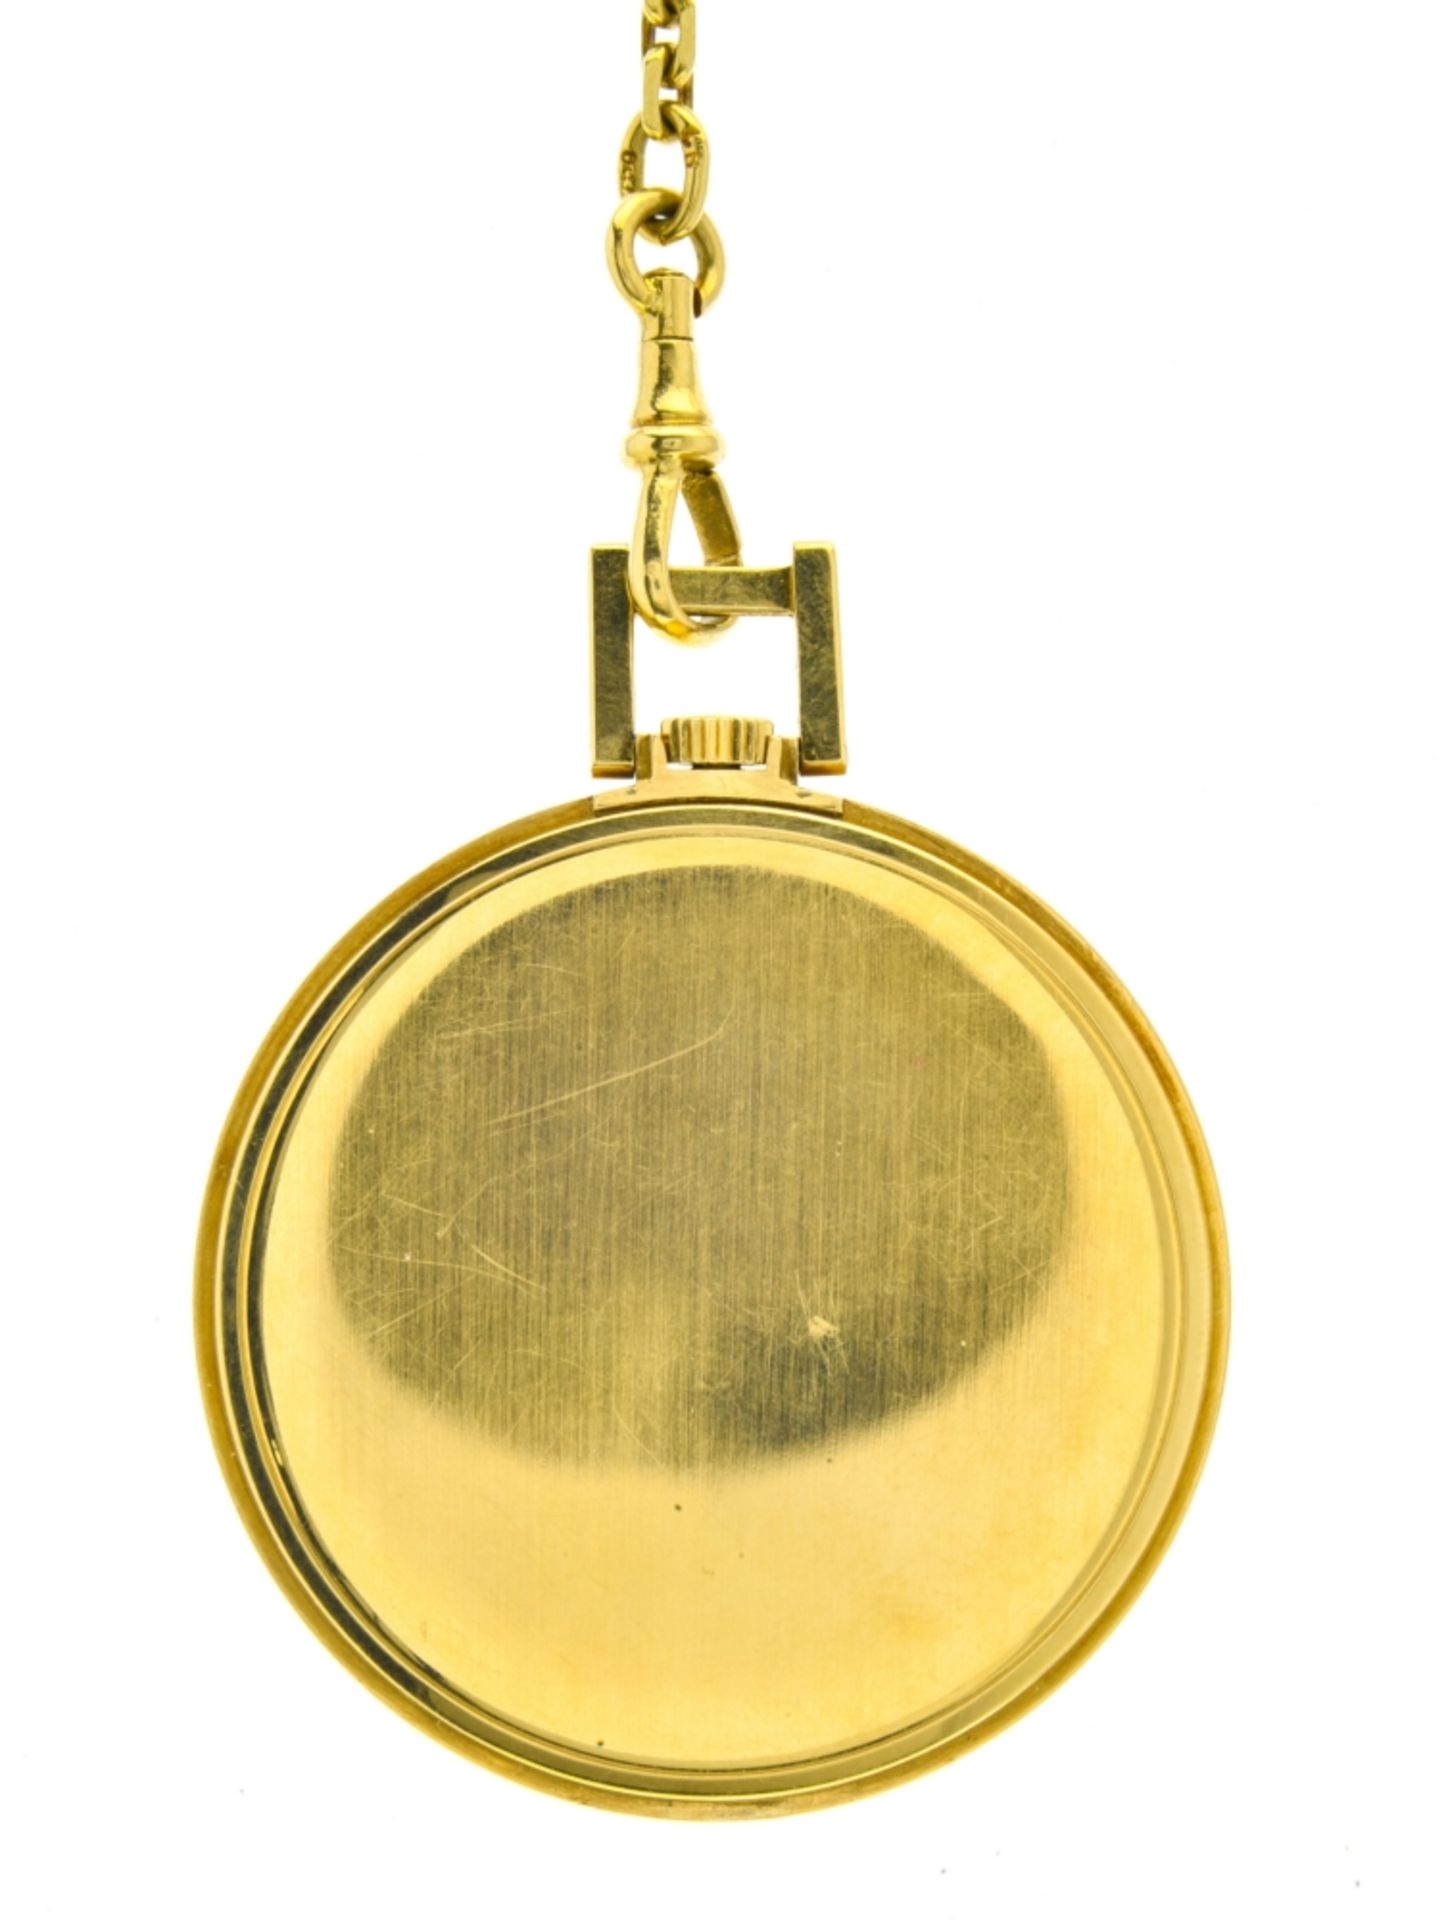 Ulysse Nardin Ulysse Nardin chronometer watch SWITZERLAND 18k gold Ulysse Nardin pocket watch. - Bild 2 aus 3